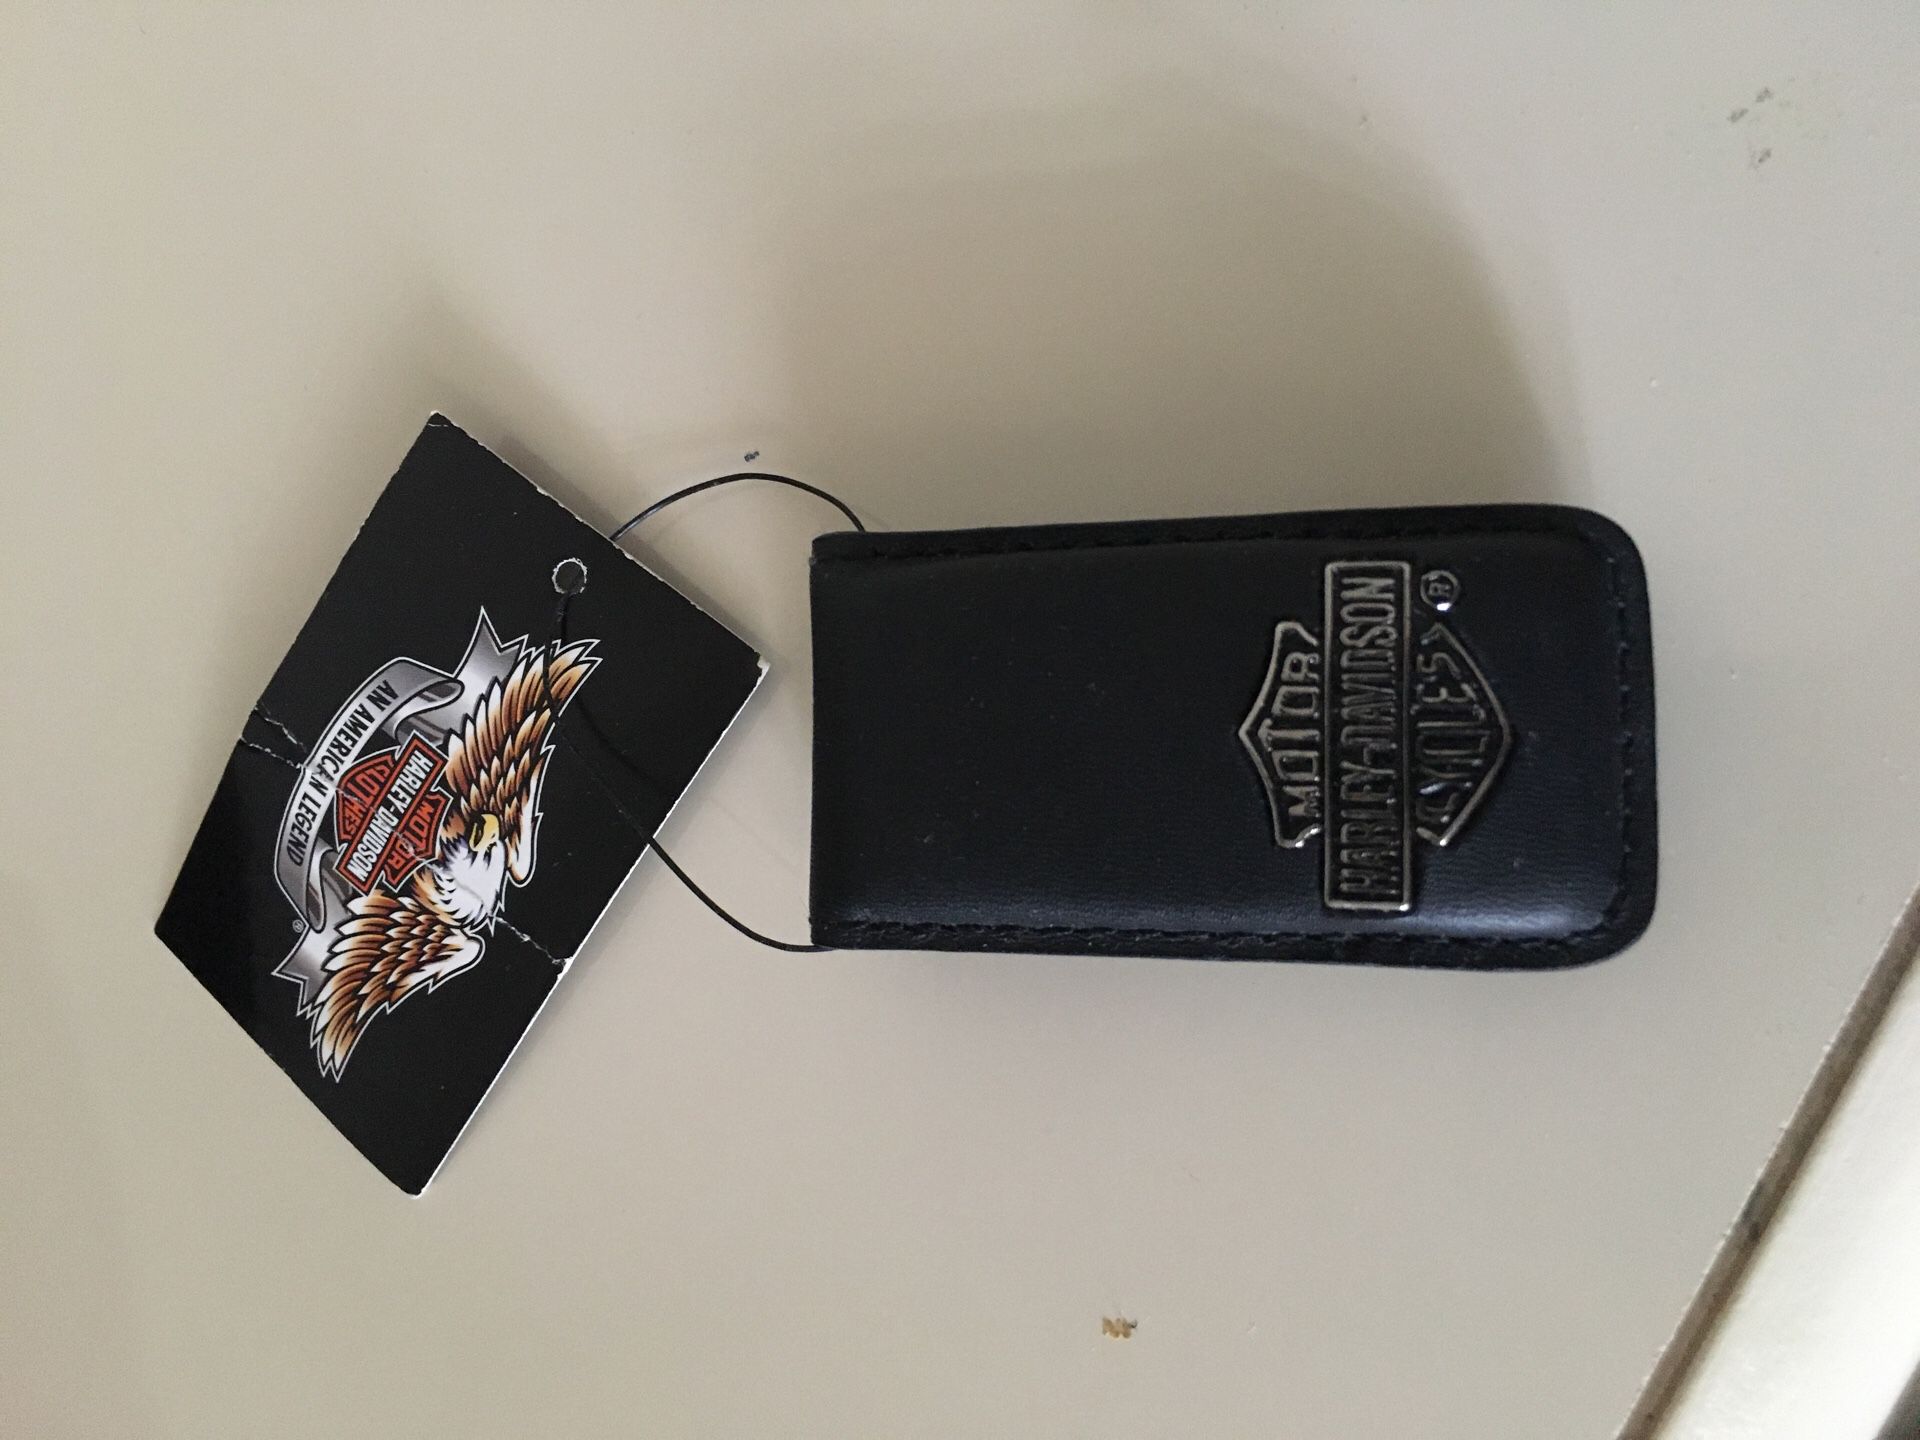 Harley Davidson money clip (leather) NOS $35